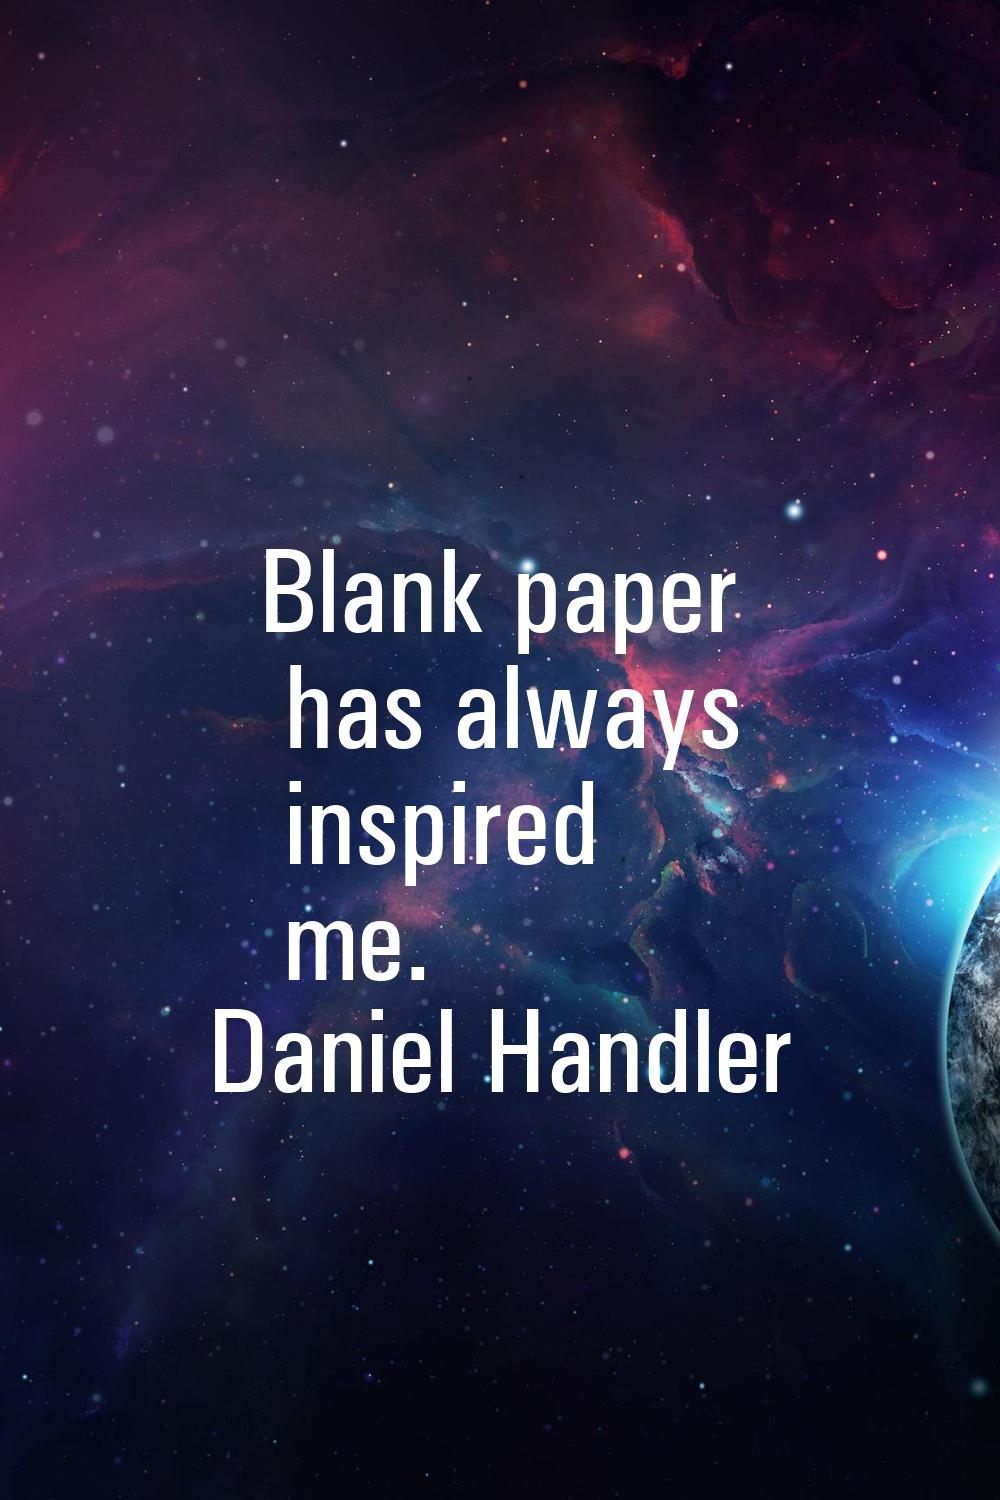 Blank paper has always inspired me.